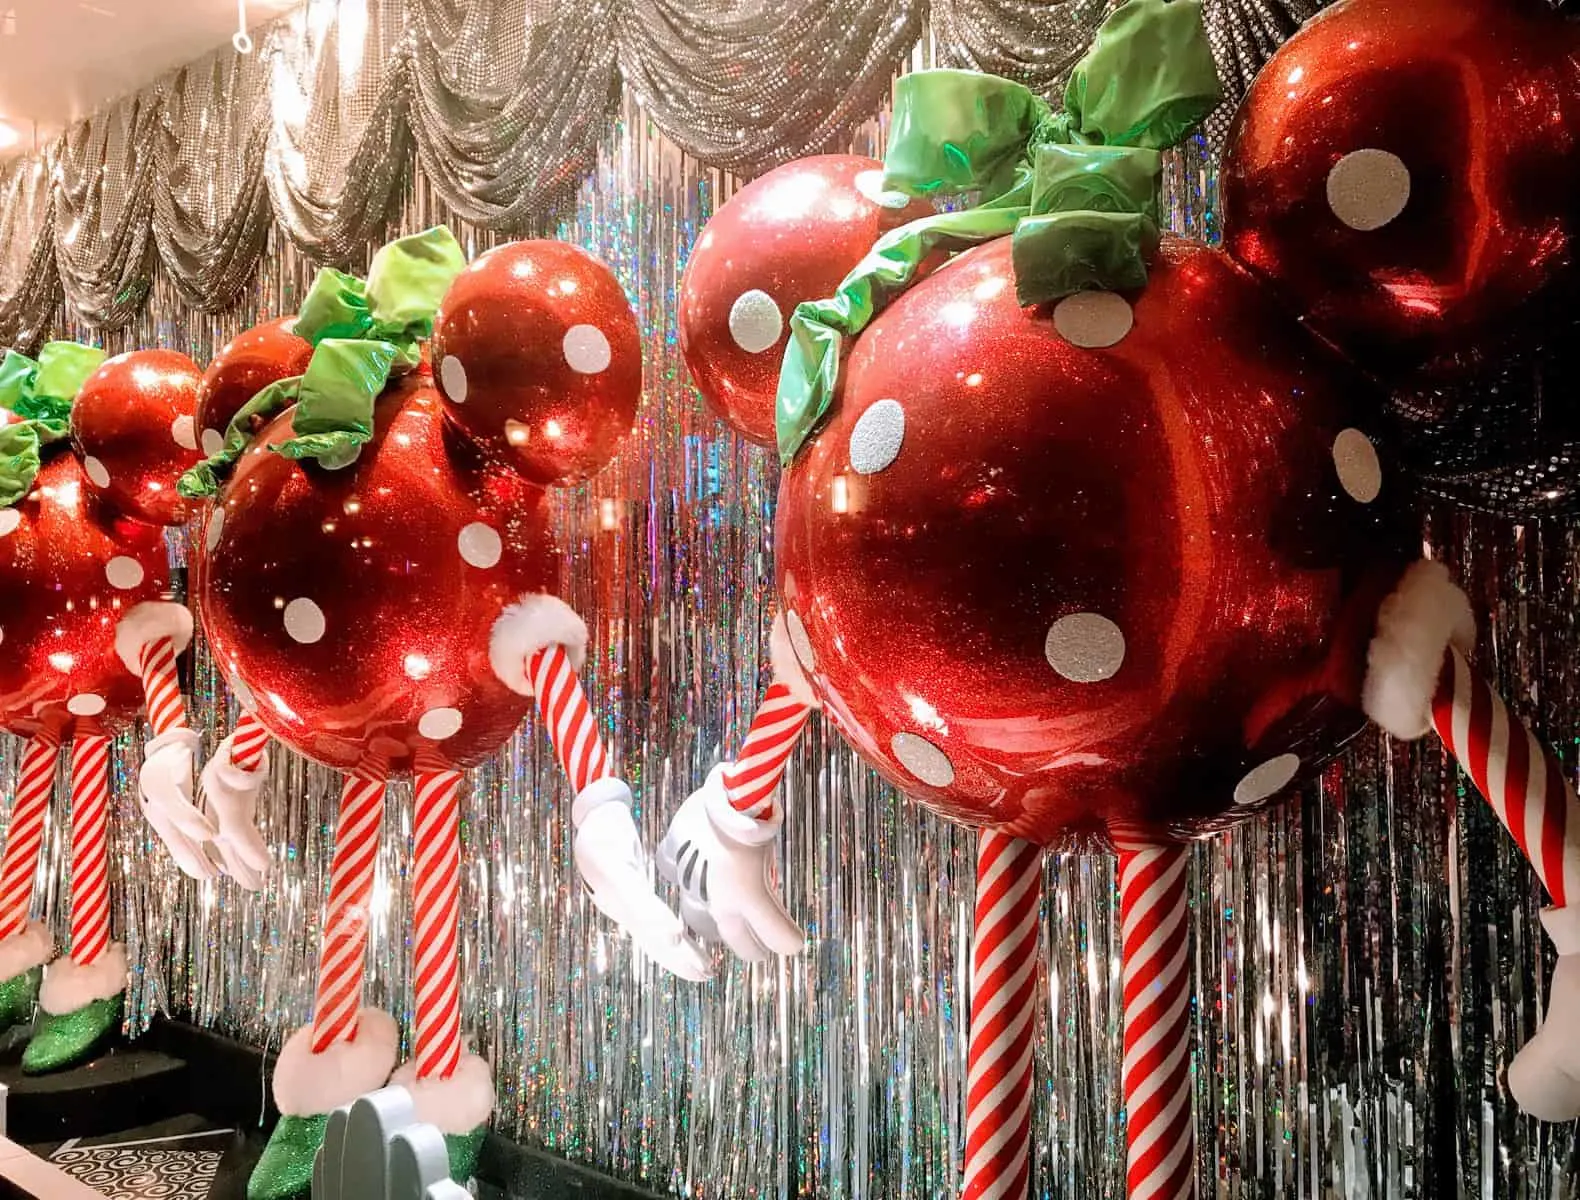 Explore christmas decorations at disney for a magical holiday season